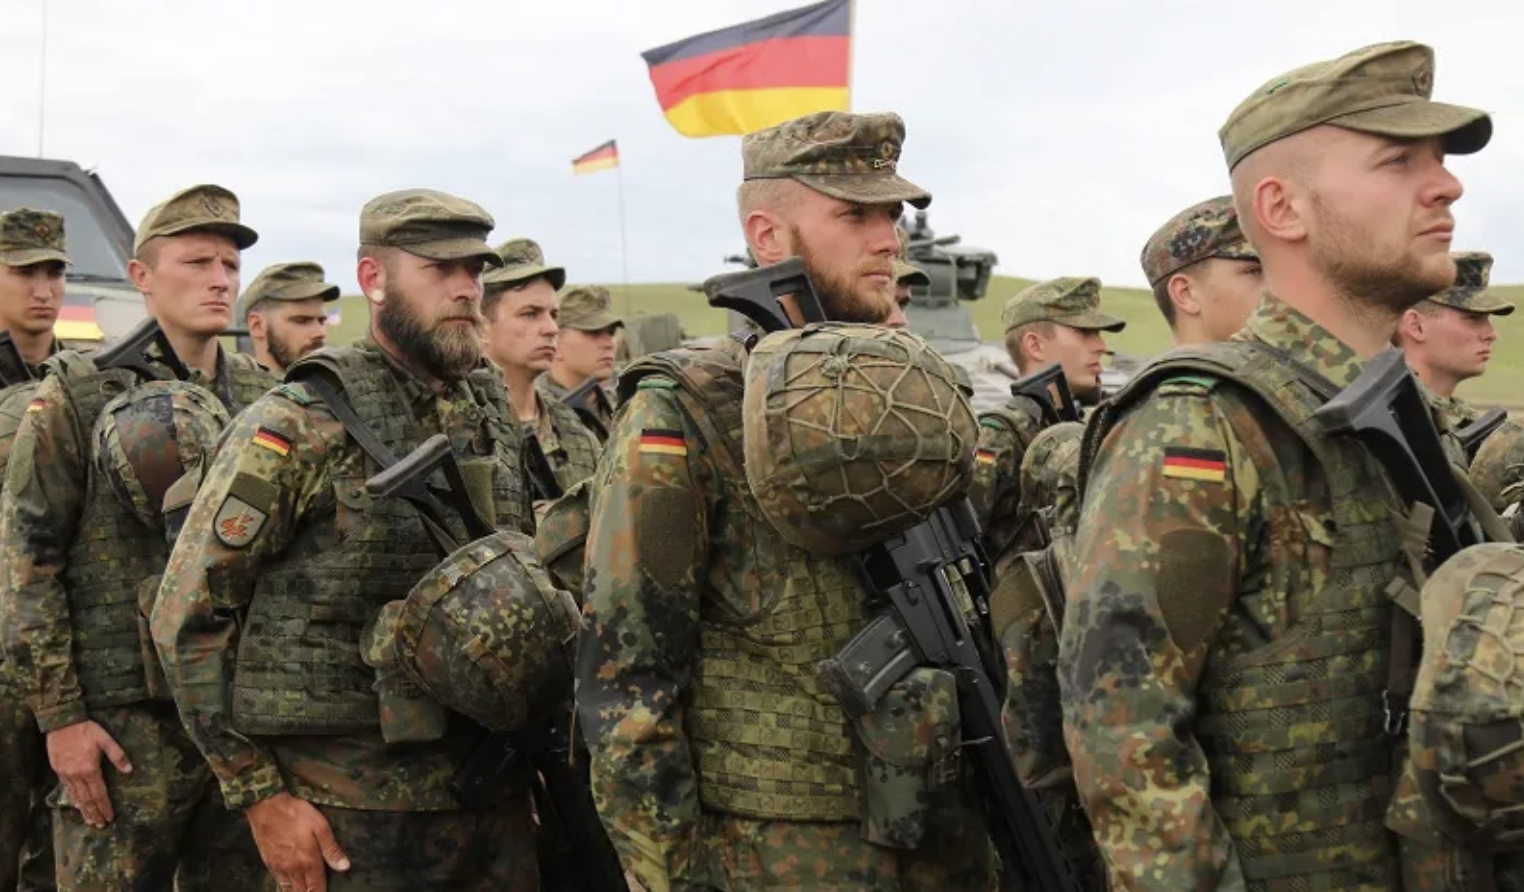 trupe militare germane; sursă foto: ziuanews.ro